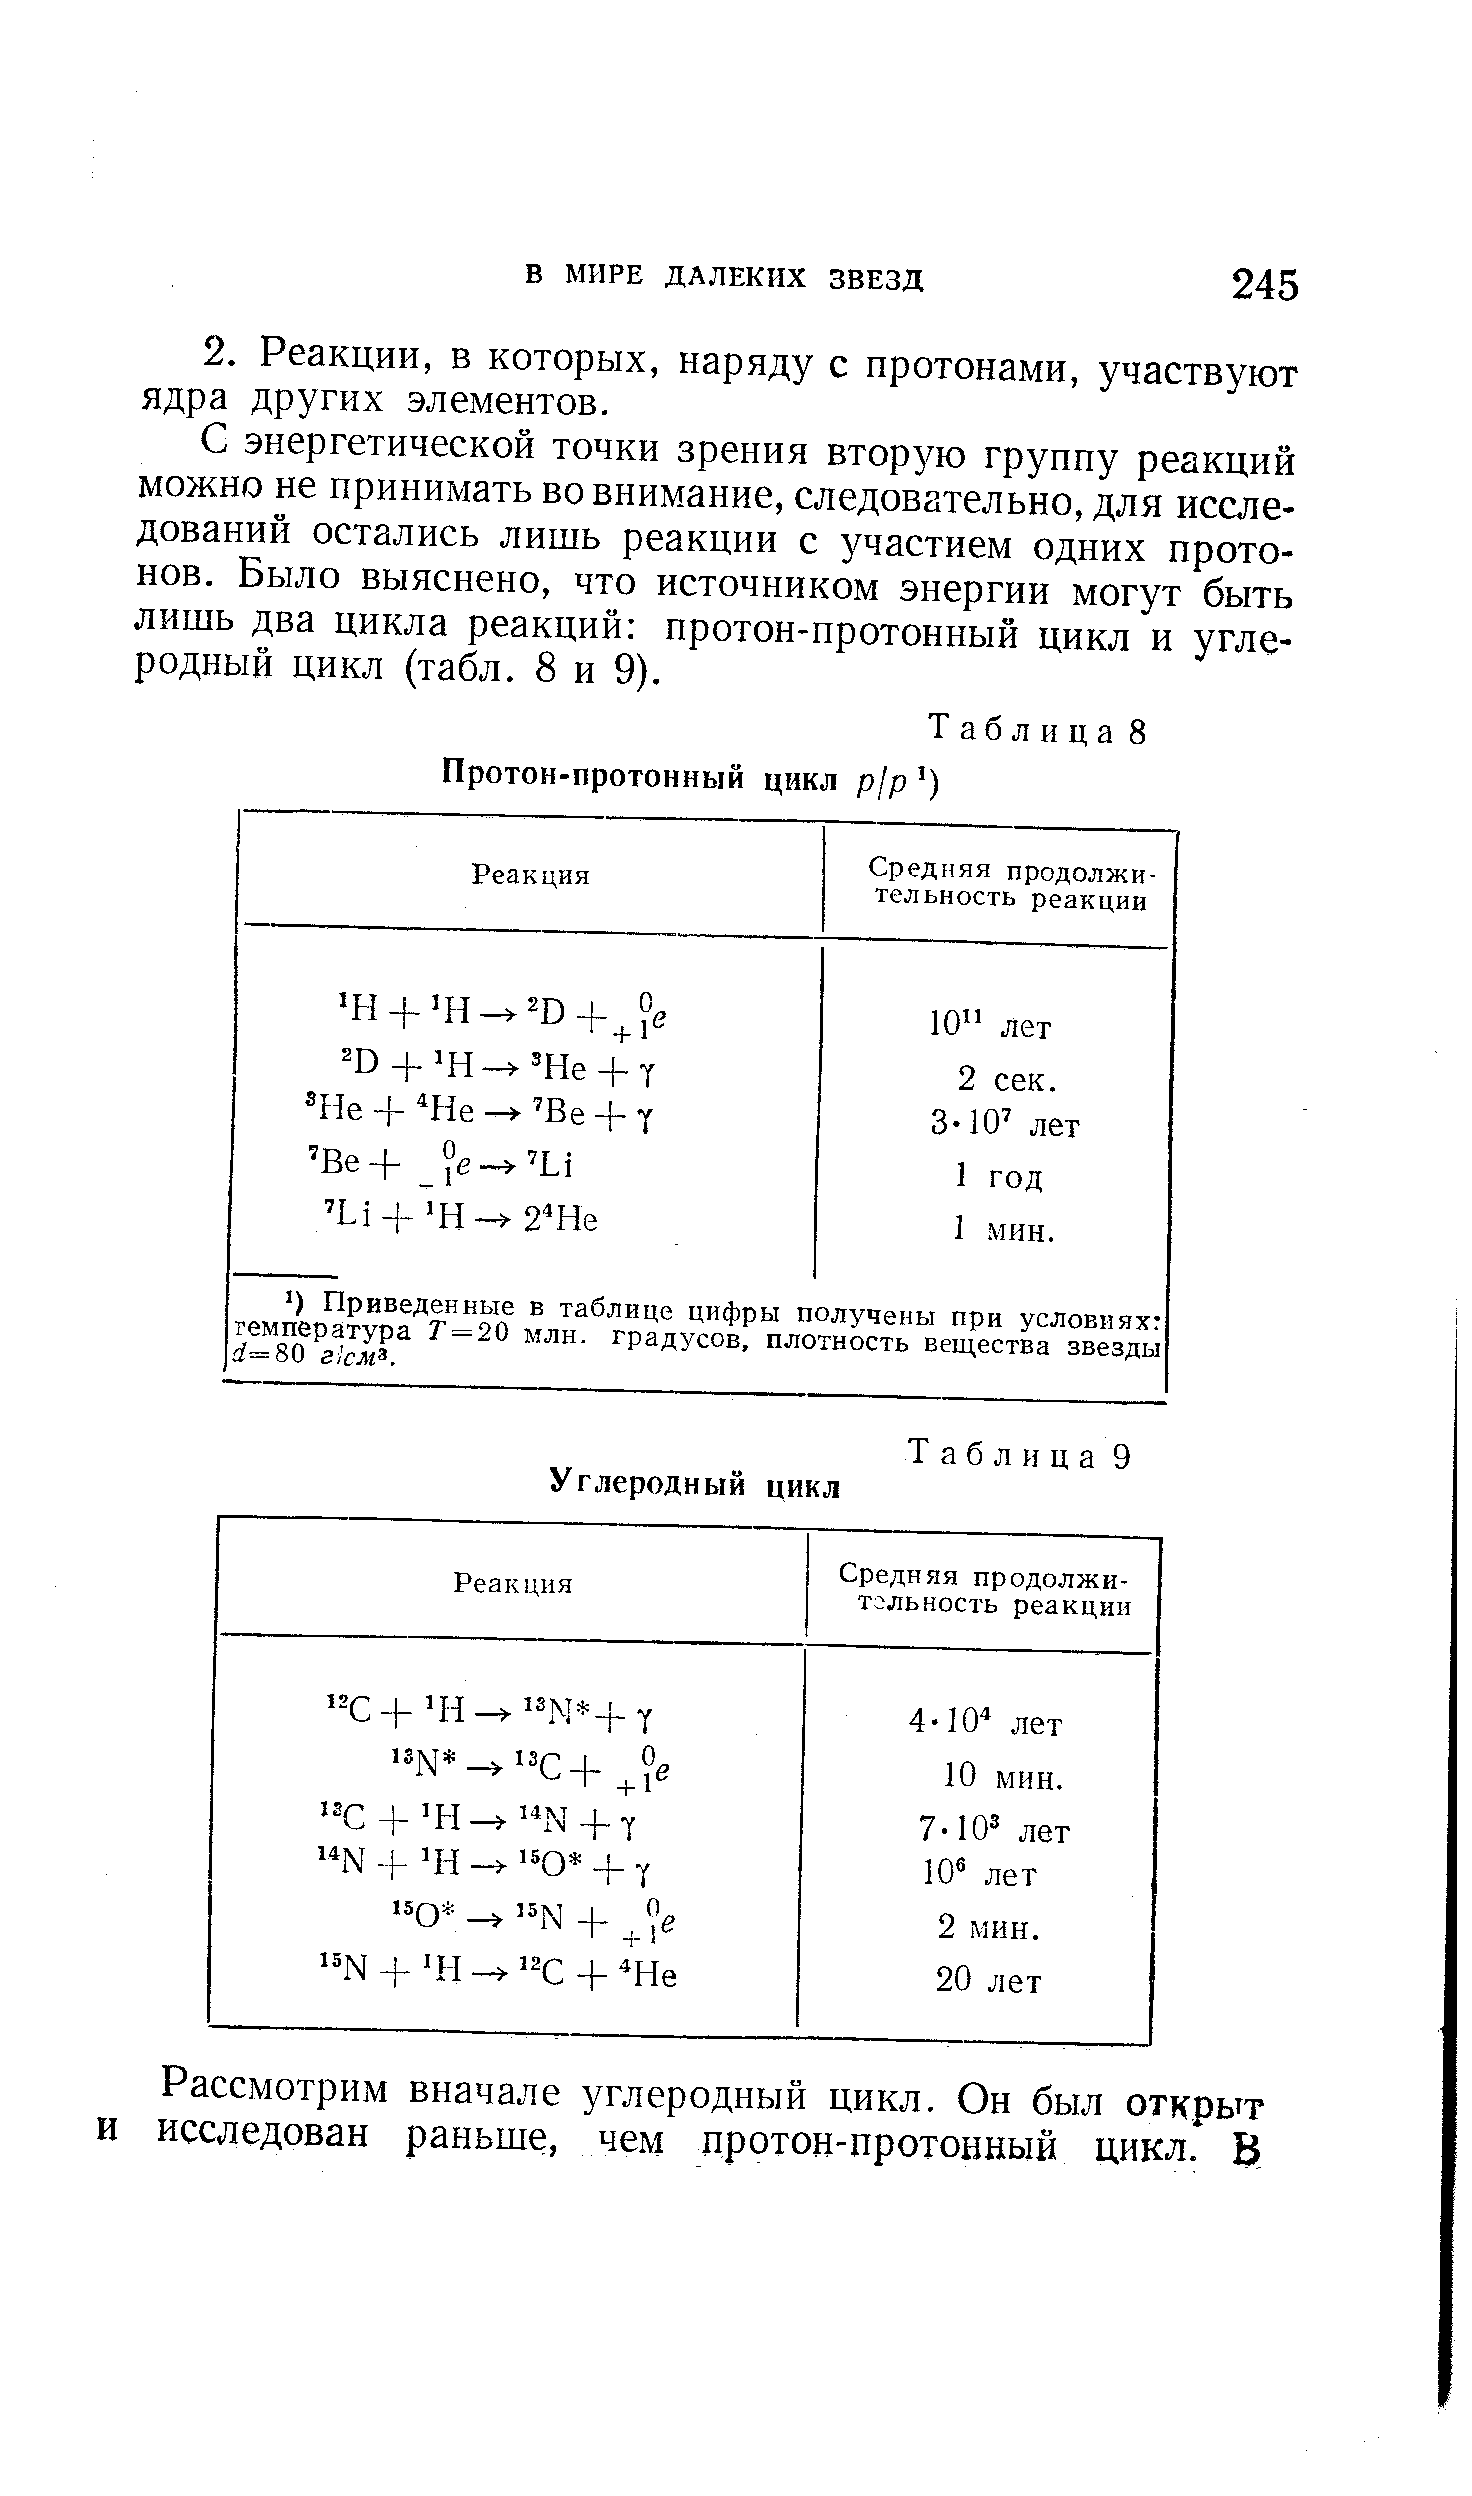 Таблица 8 <a href="/info/13751">Протон-протонный</a> цикл р1р )
